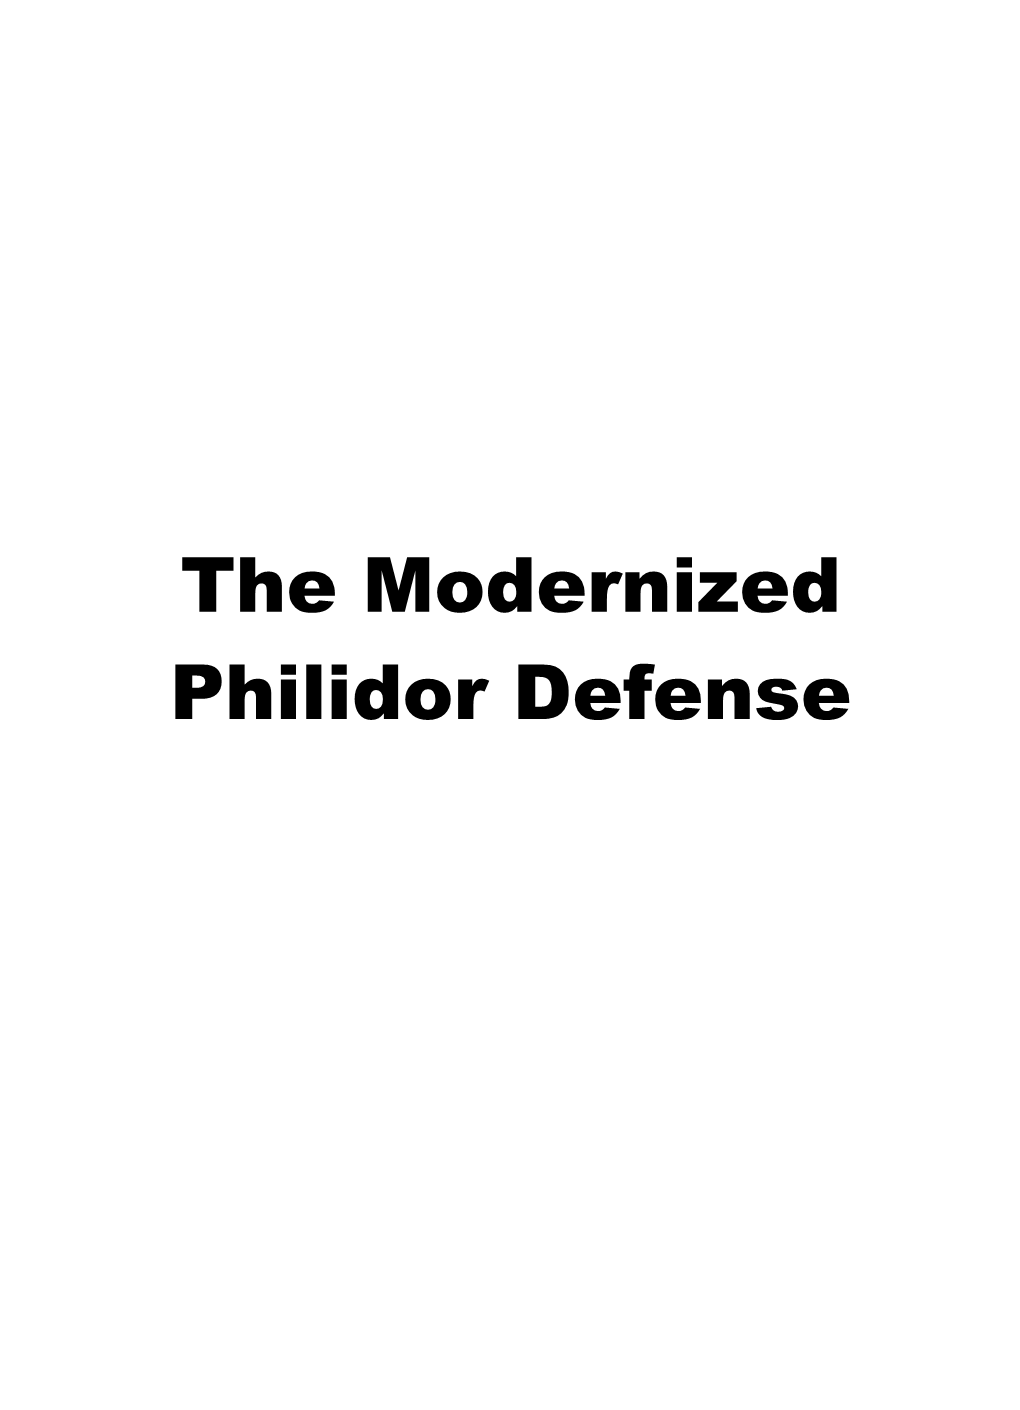 The Modernized Philidor Defense